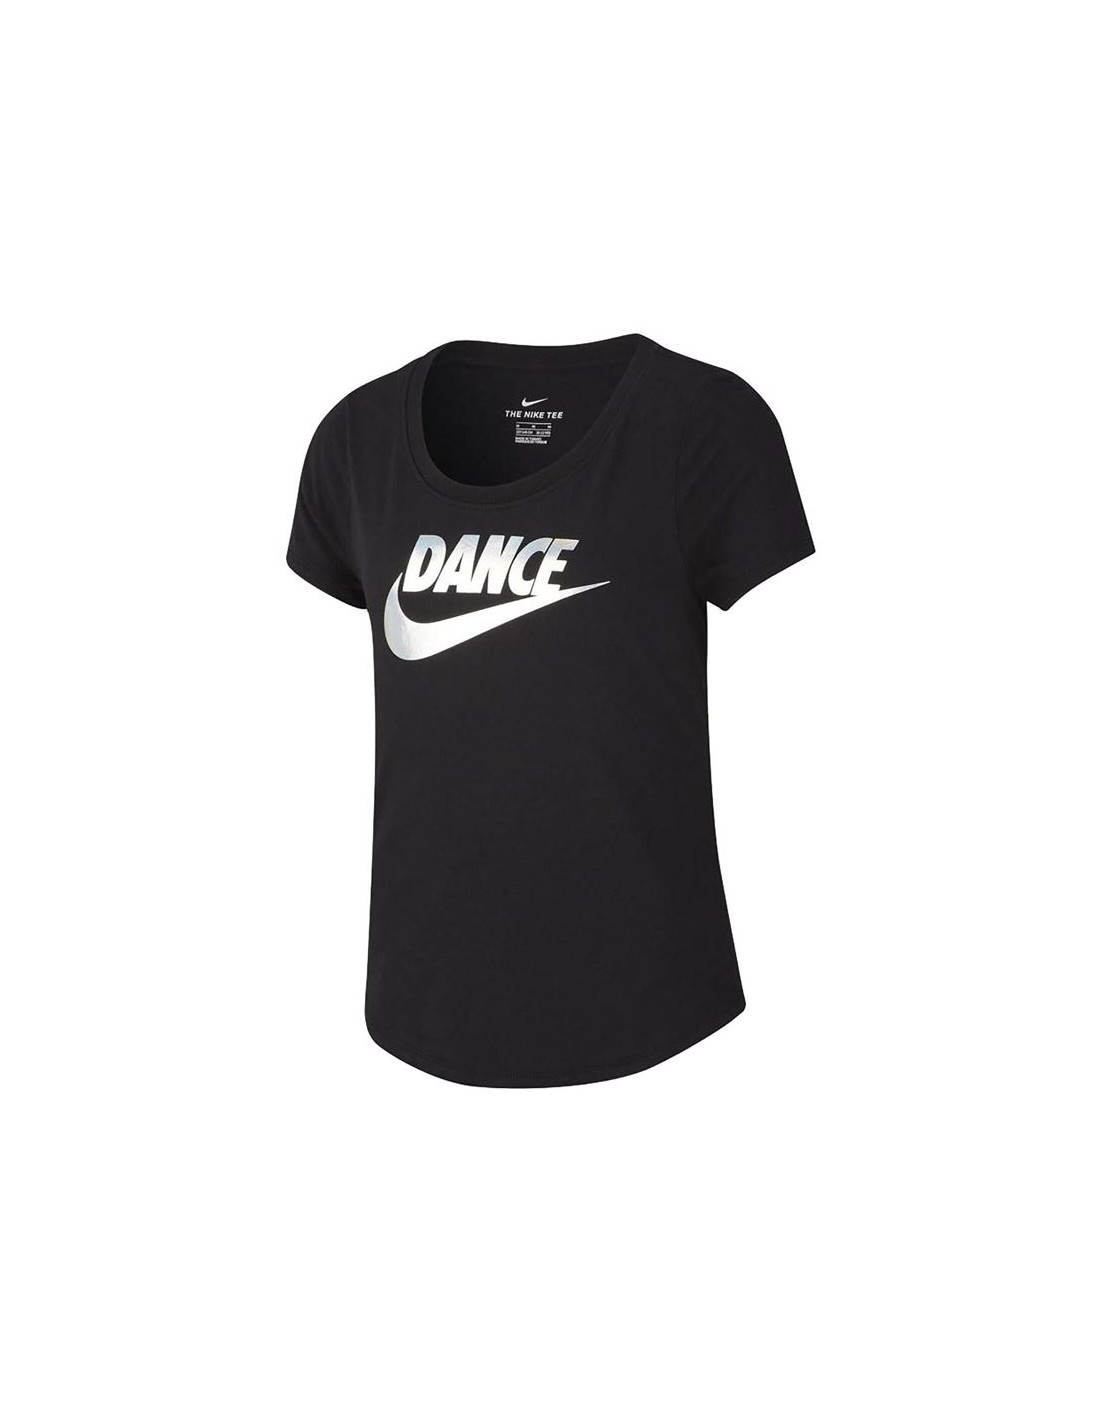 Camiseta sportswear nike dry scoop dance